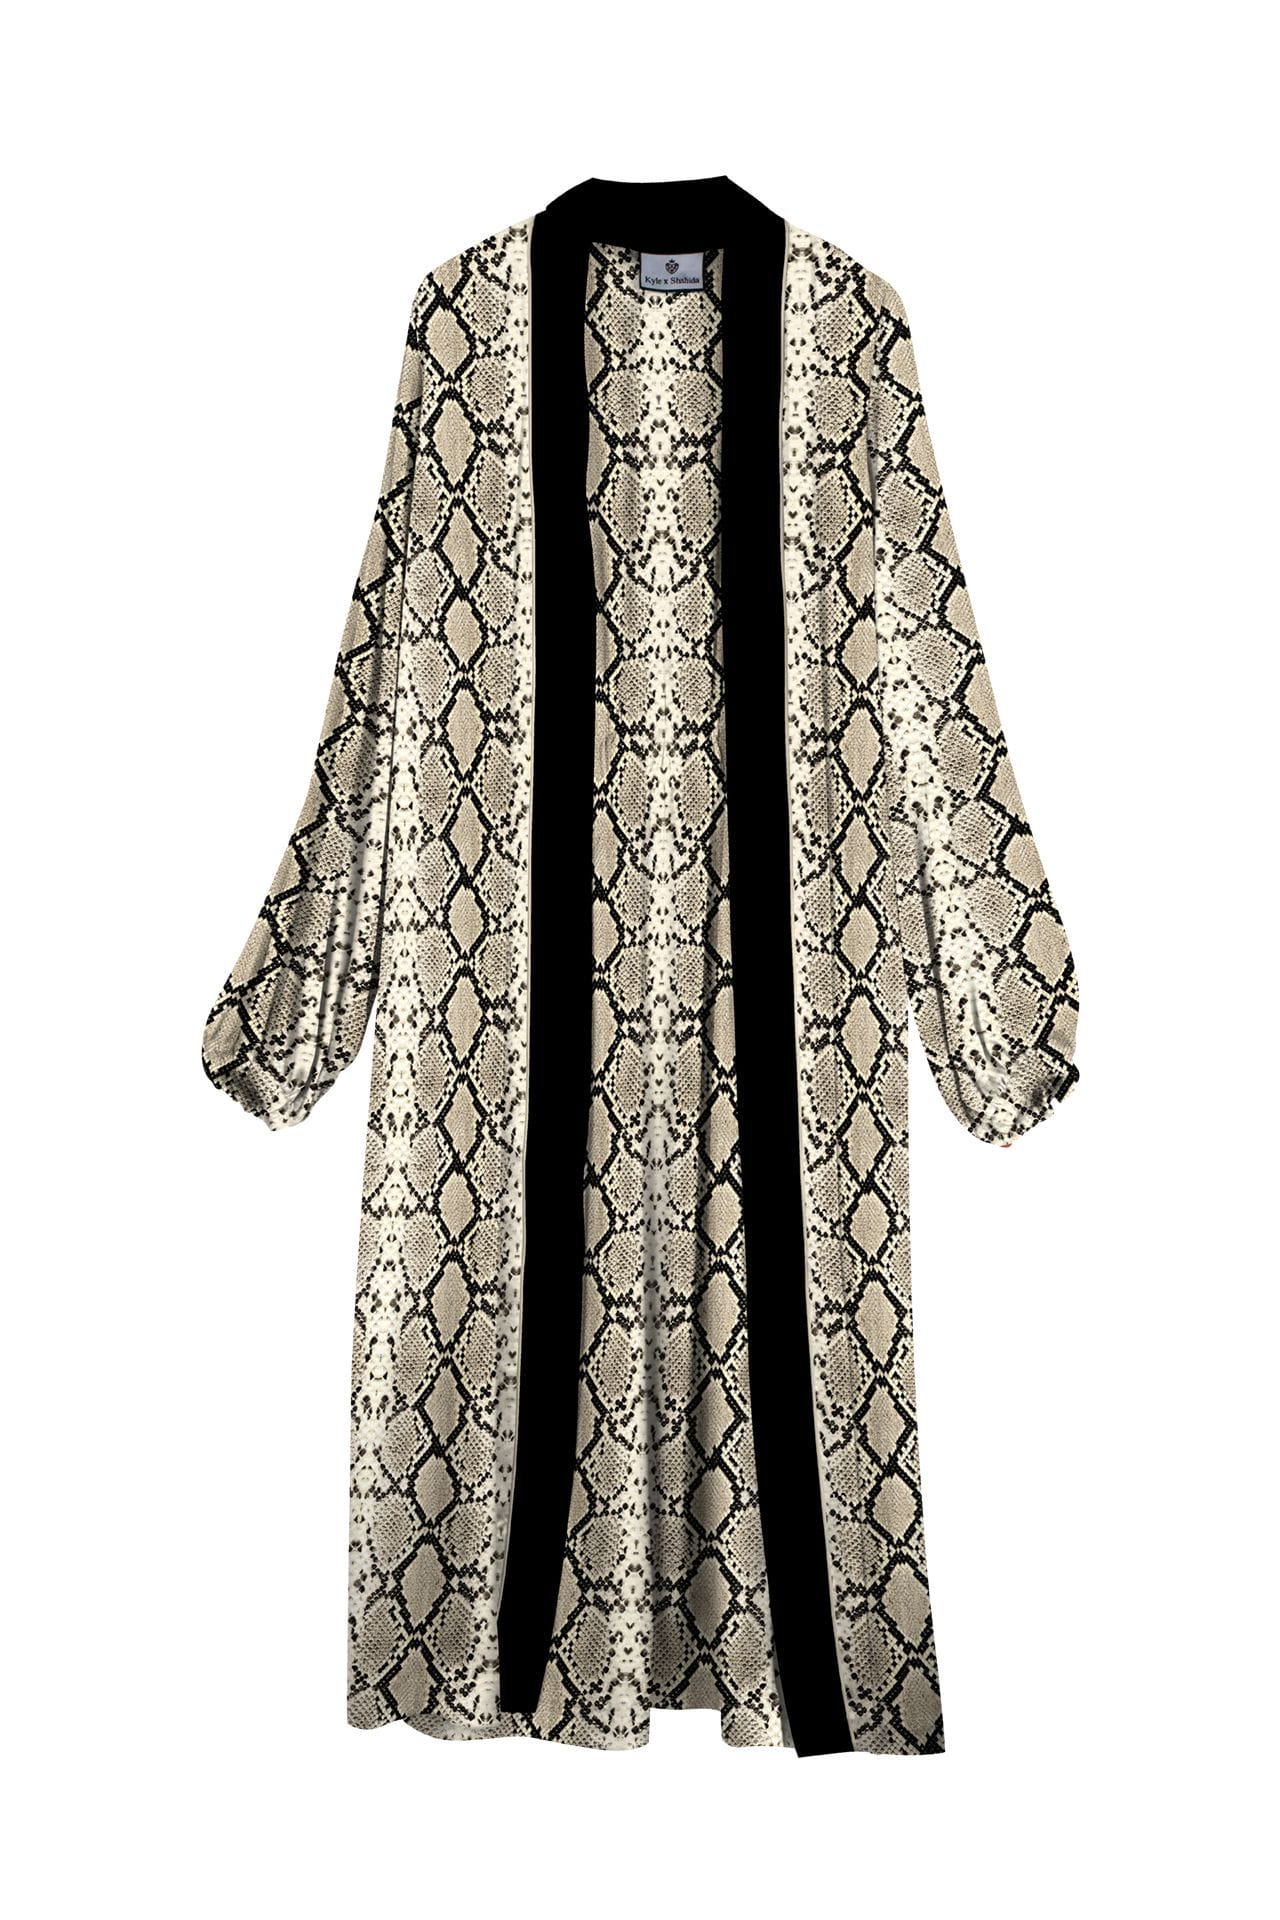 "silk kimono robes for women" "Kyle X Shahida" "silk kimono robe" "silk kimono robe womens" "womens animal print robe"